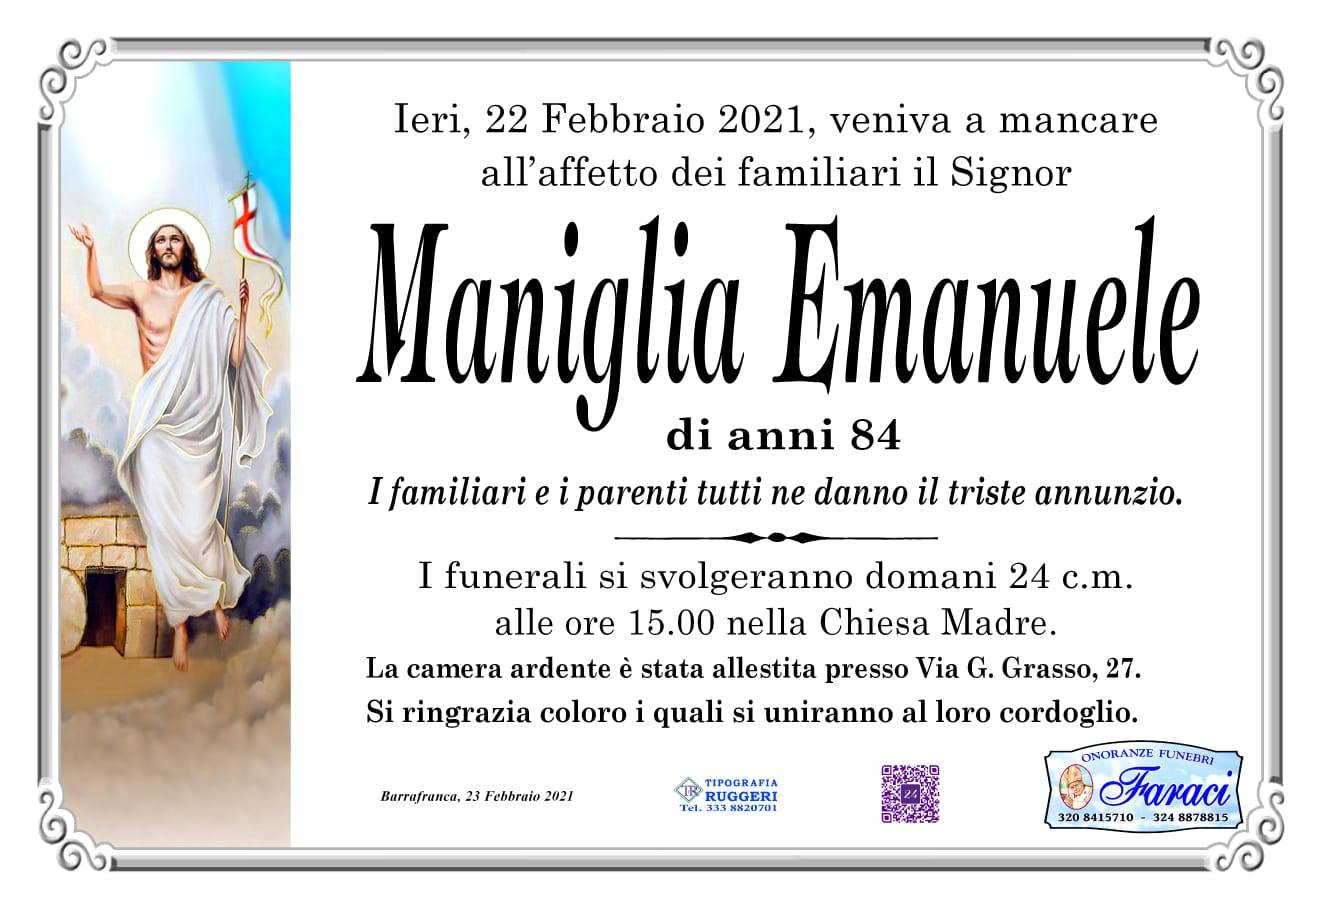 Emanuele Maniglia